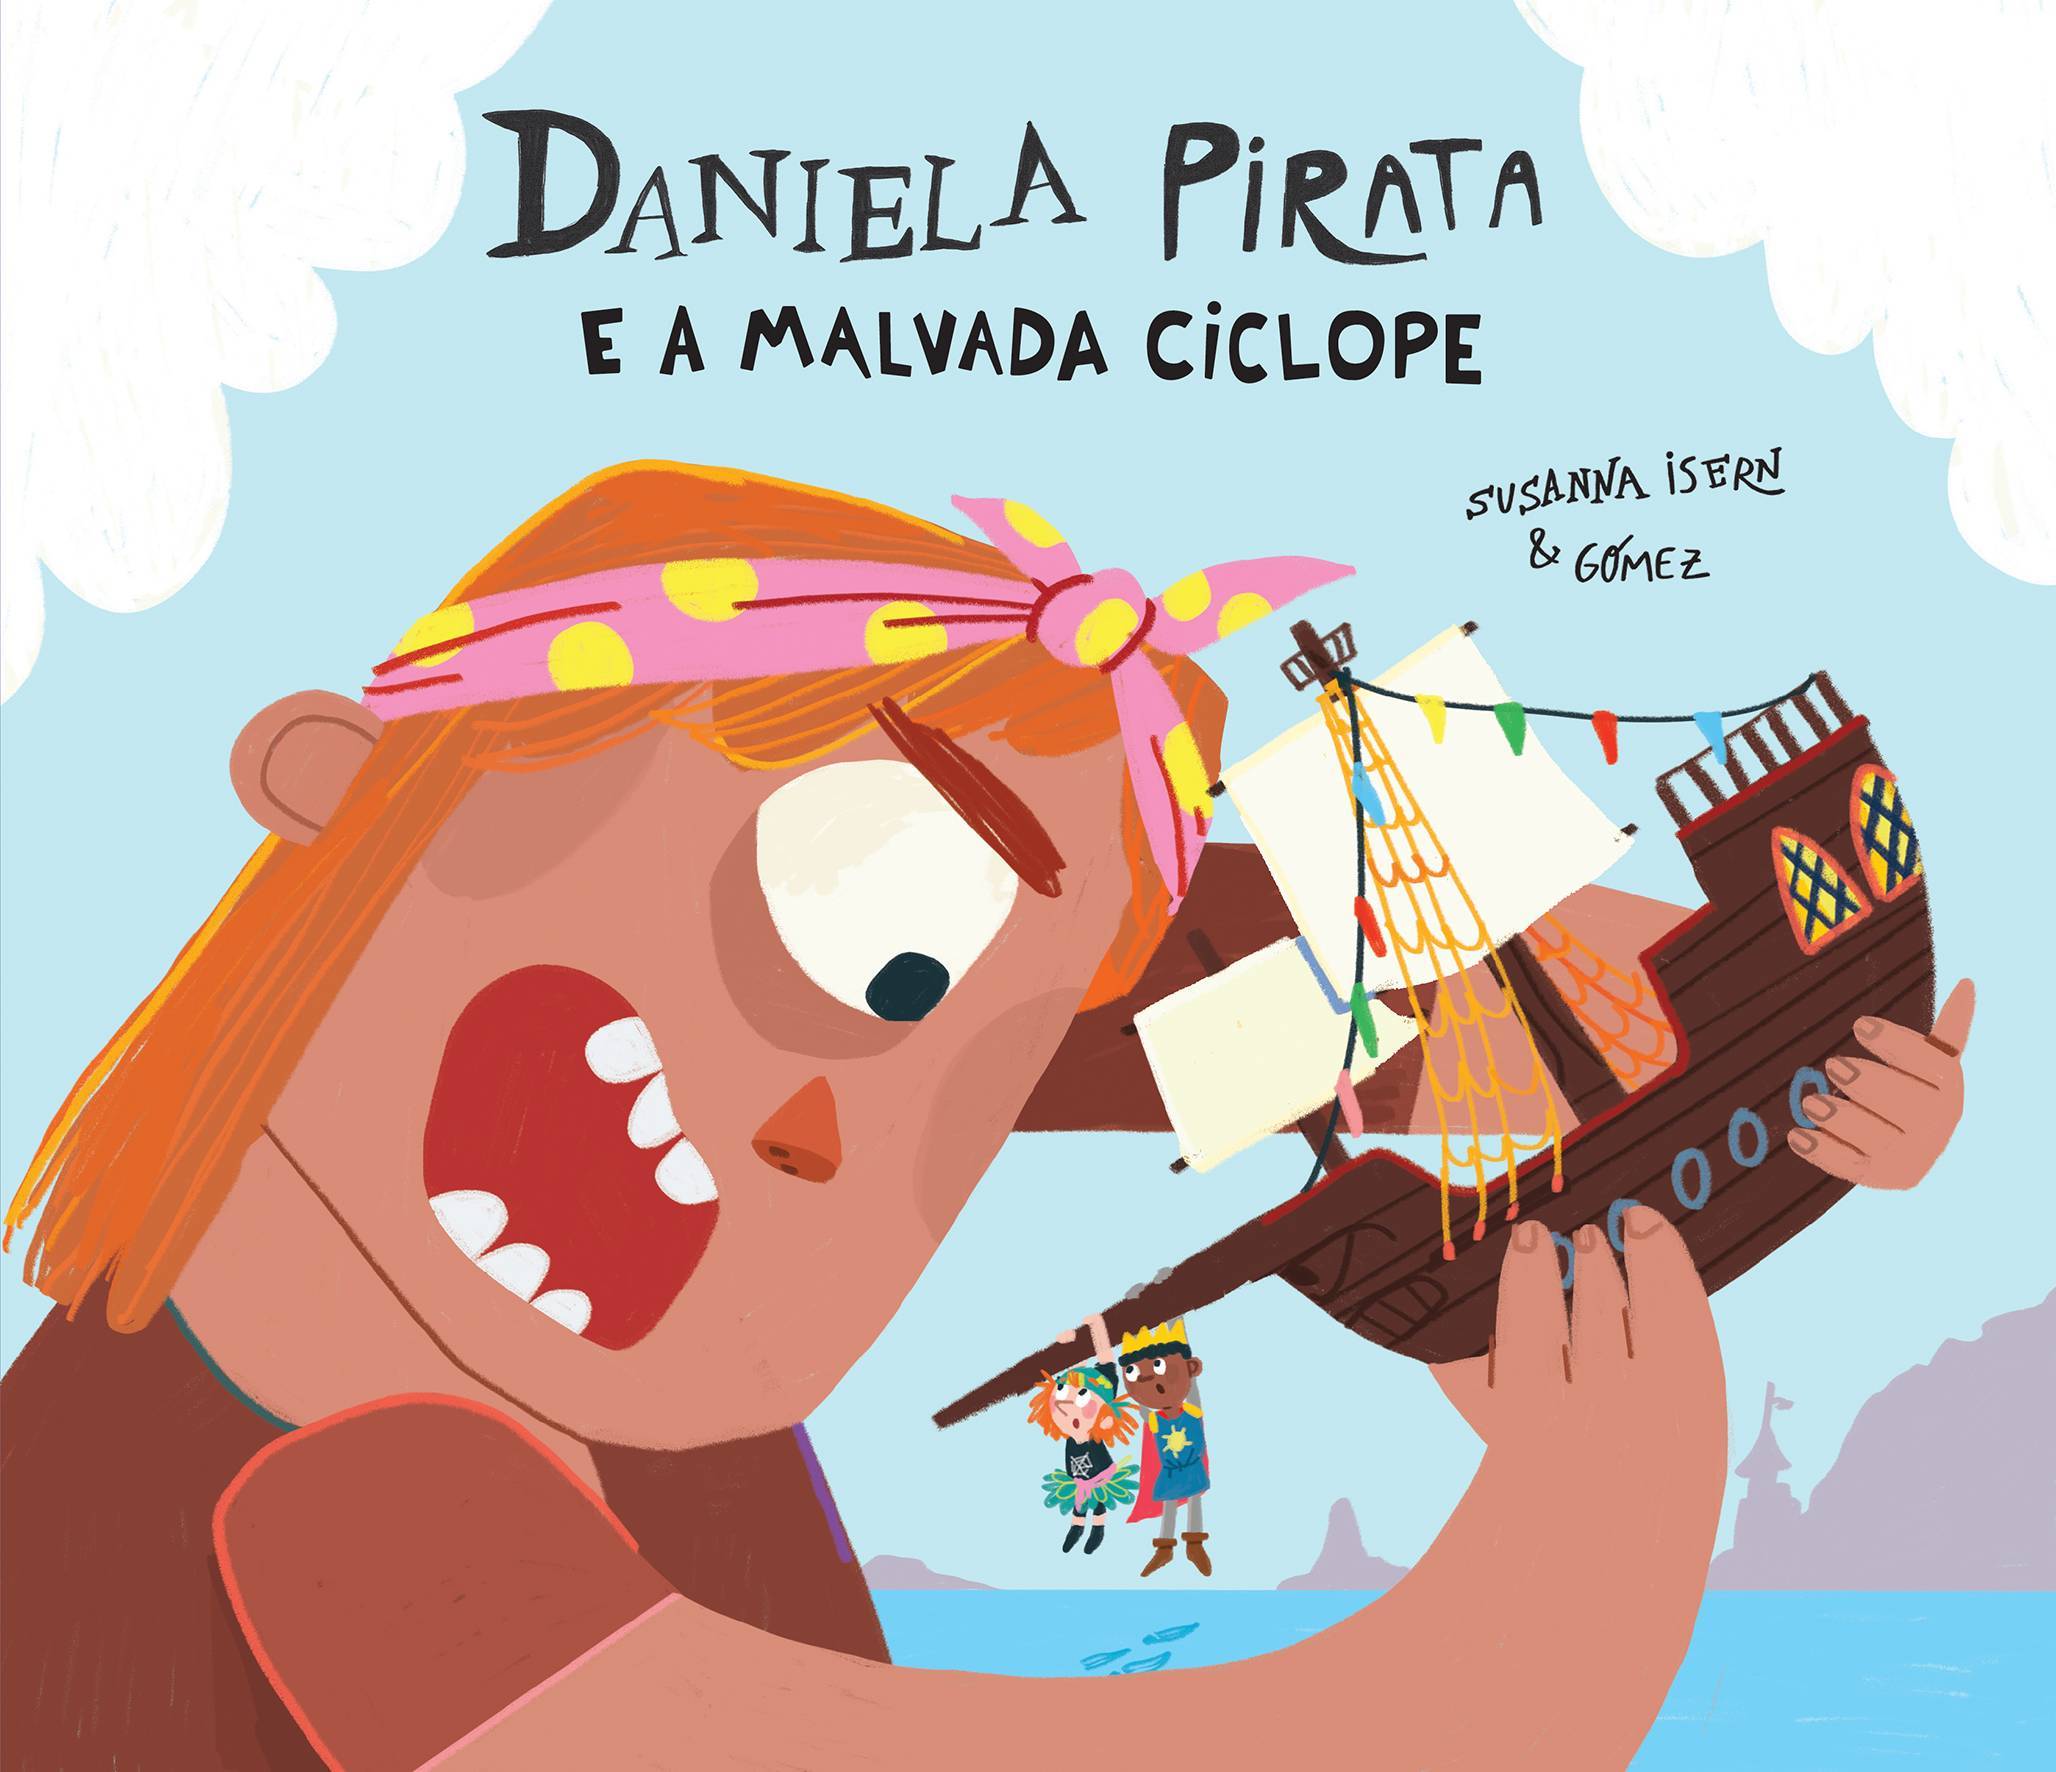 Daniela Pirata e a malvada ciclope